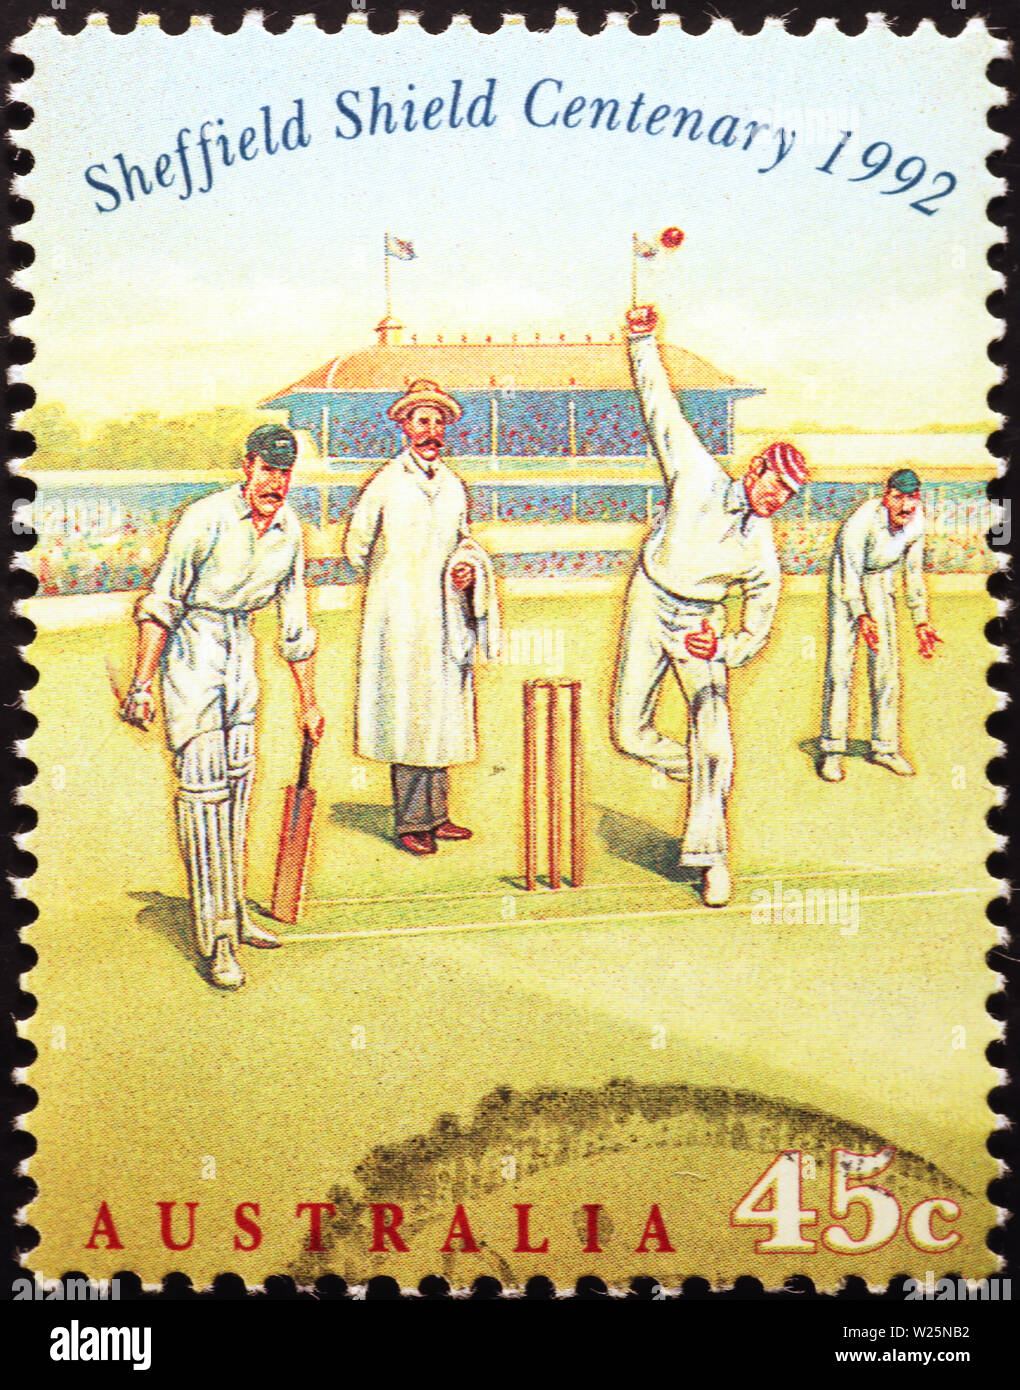 Vintage cricket players on australian postage stamp Stock Photo